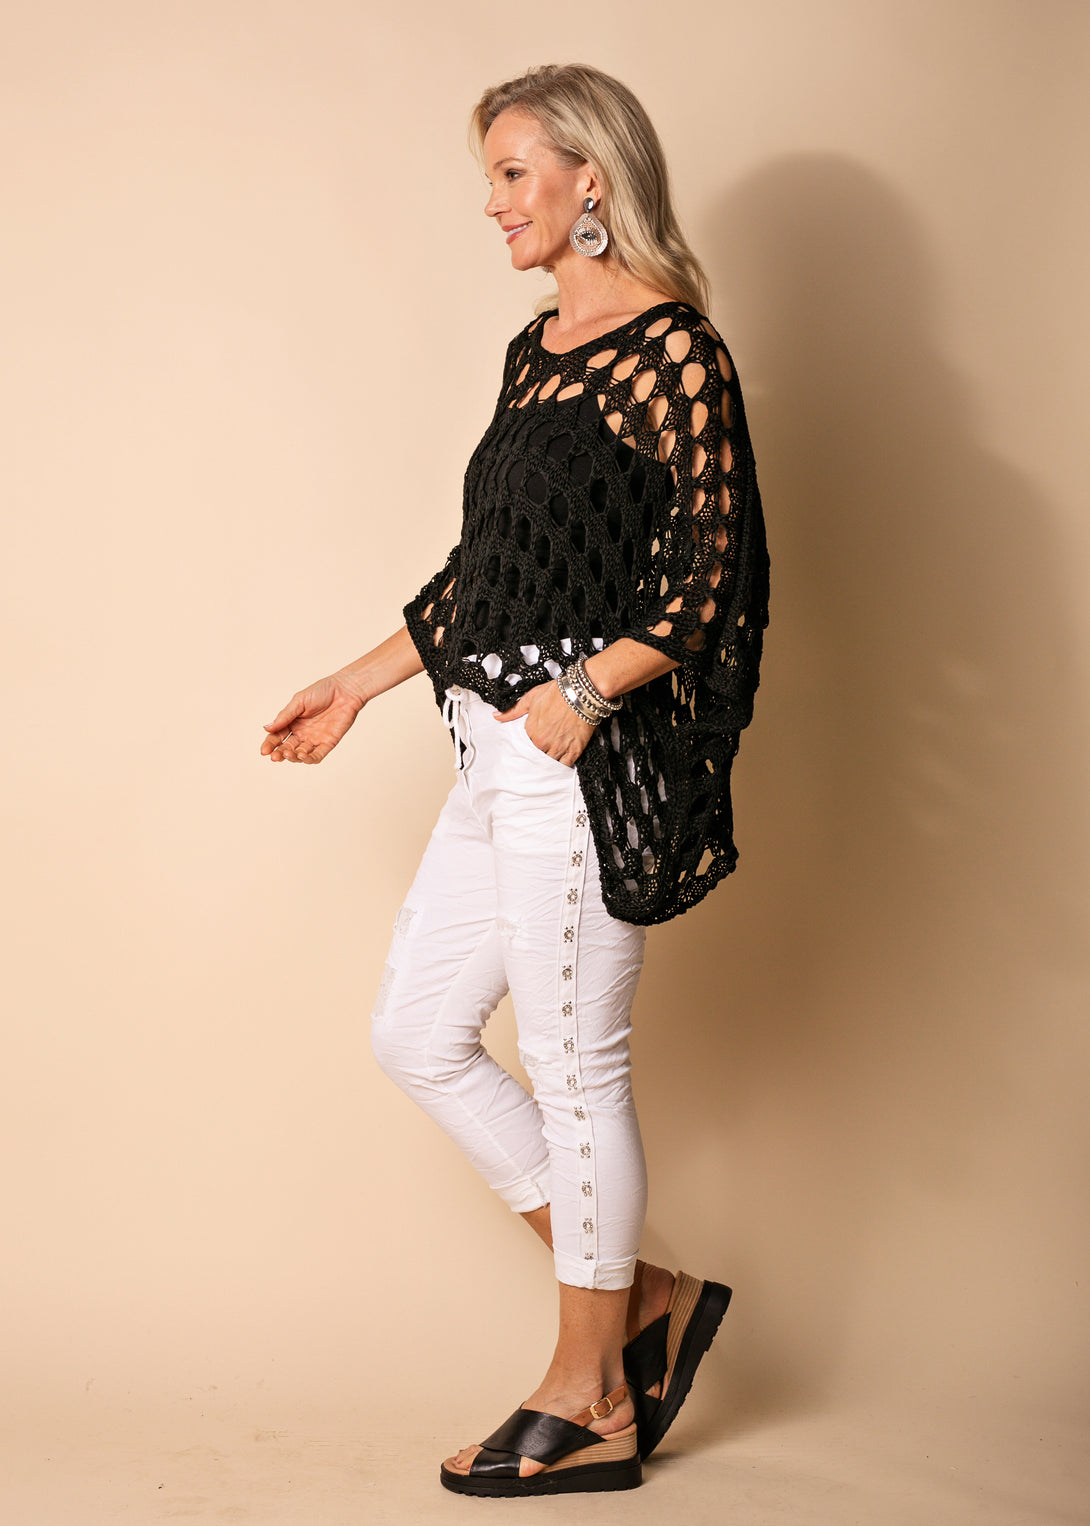 Asha Knit Top in Black - Imagine Fashion